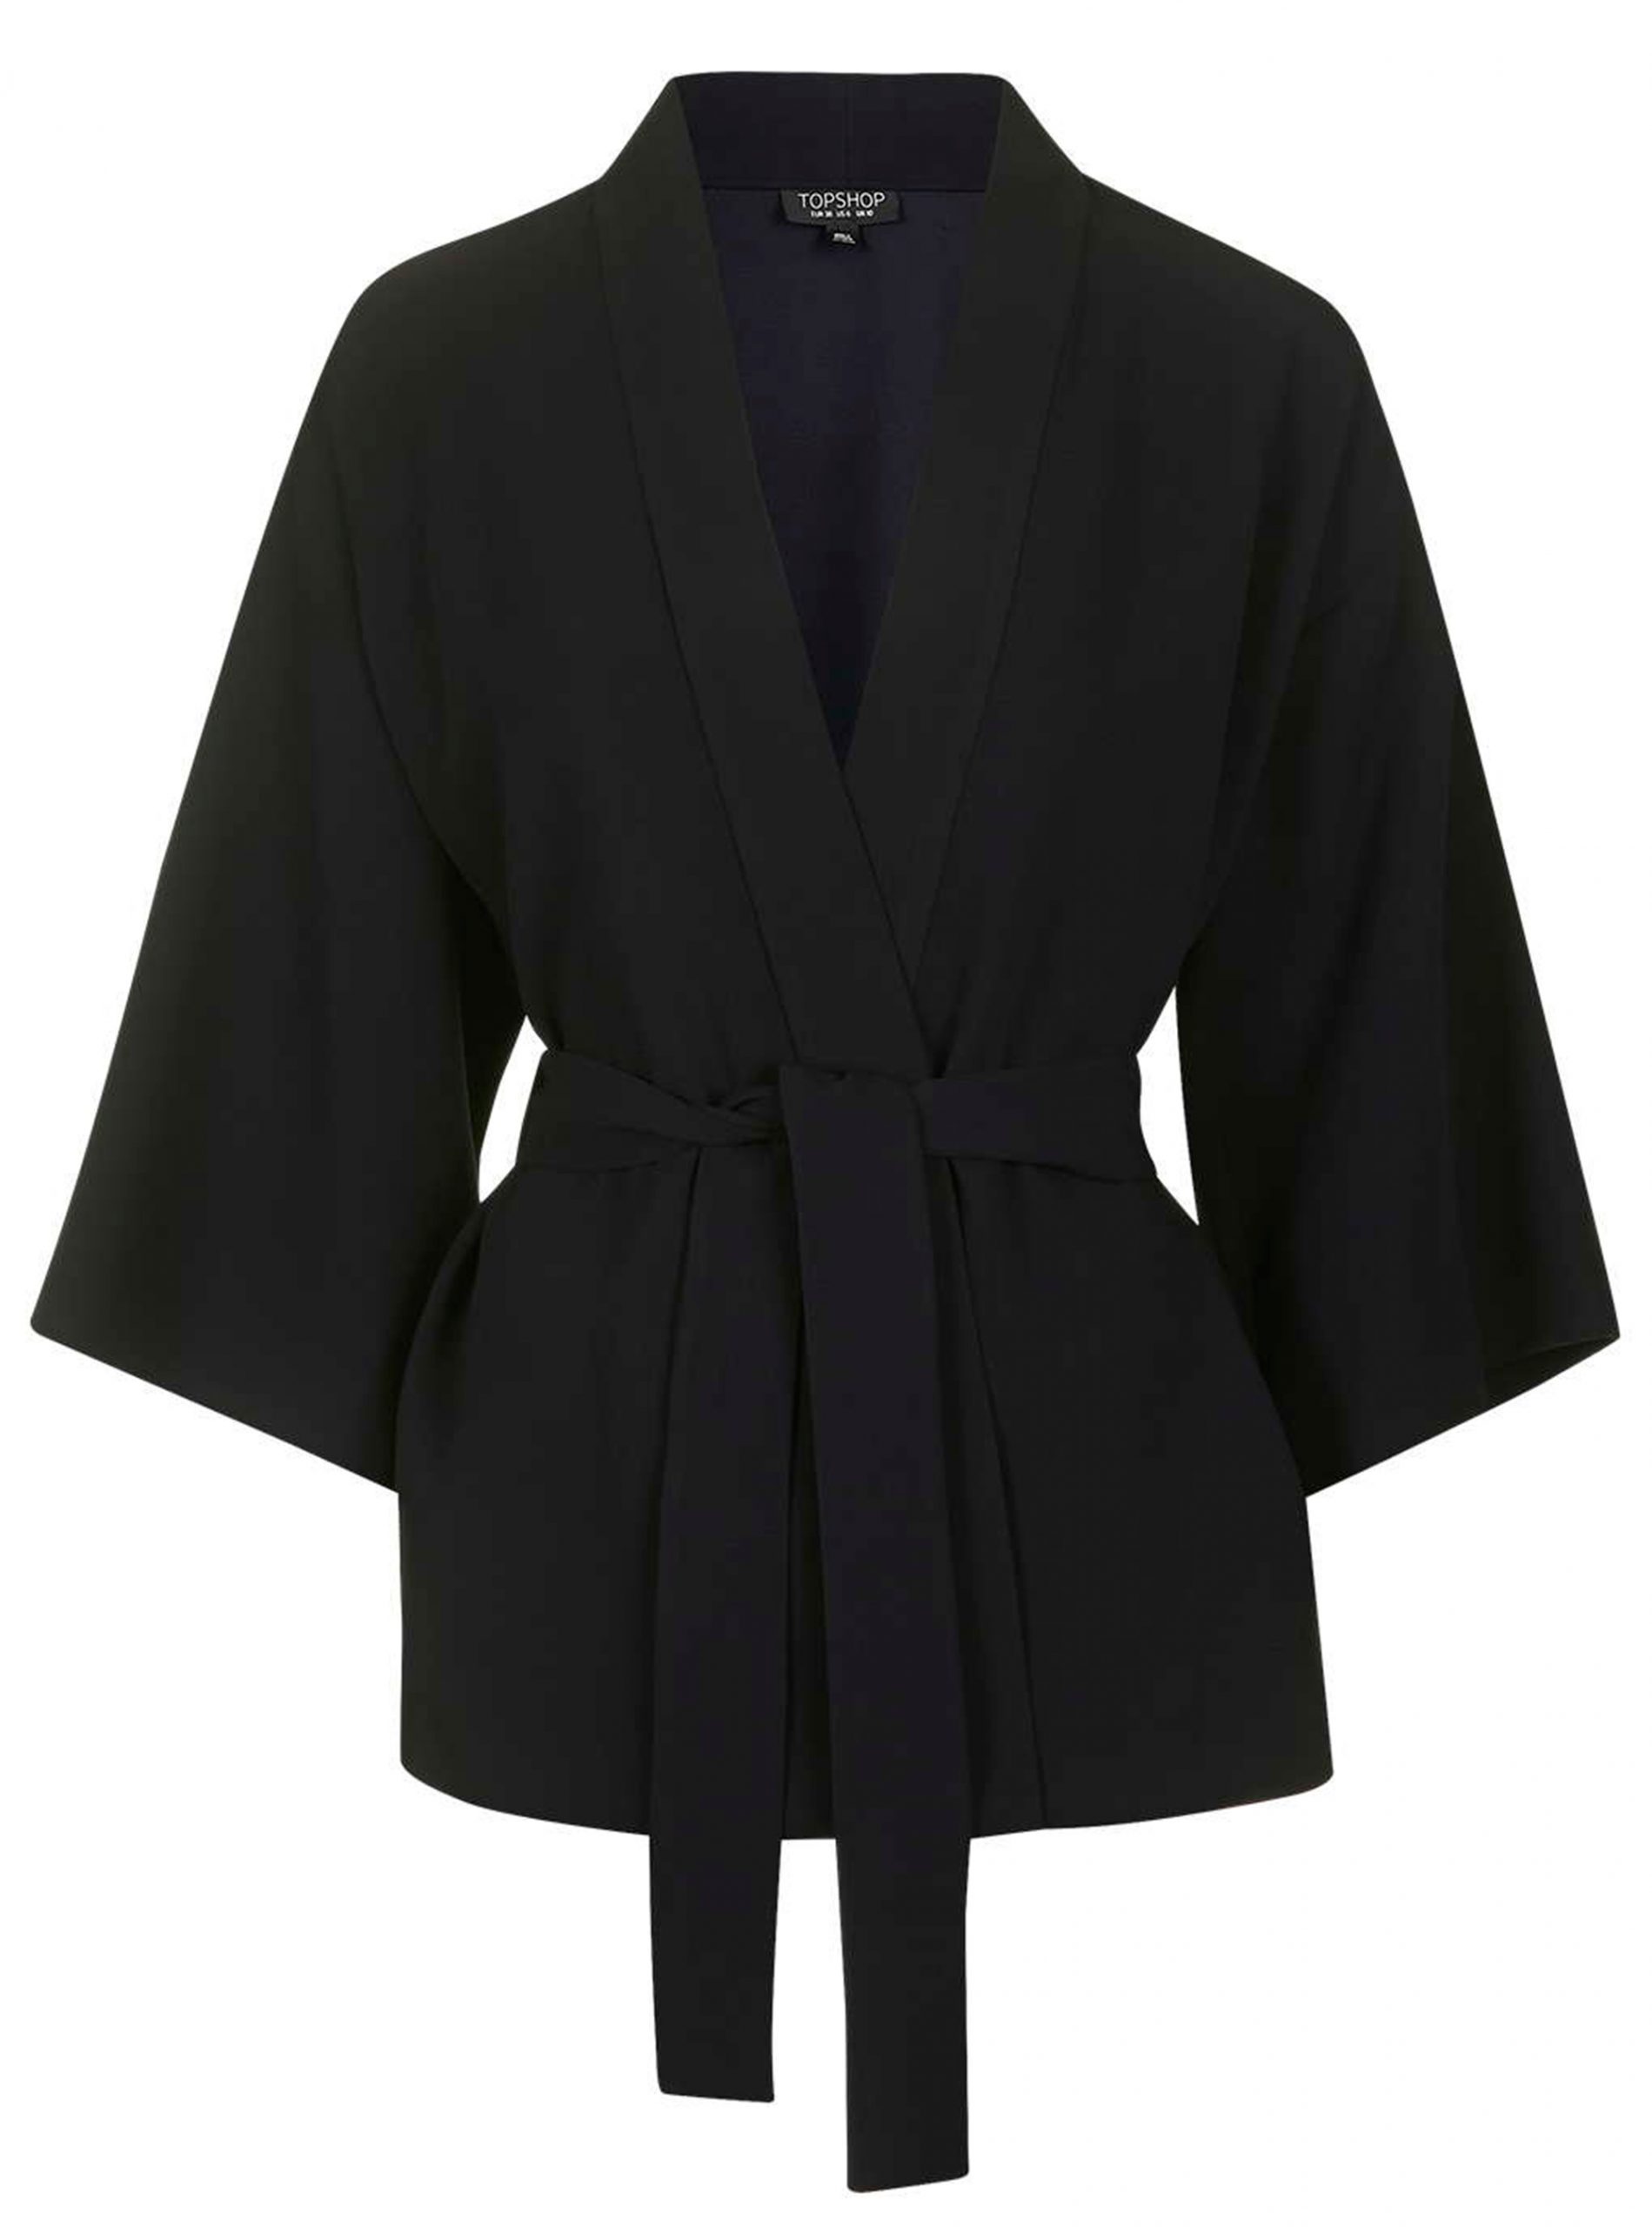 Kimono Jackets: How To Wear The Trend | Woman & Home